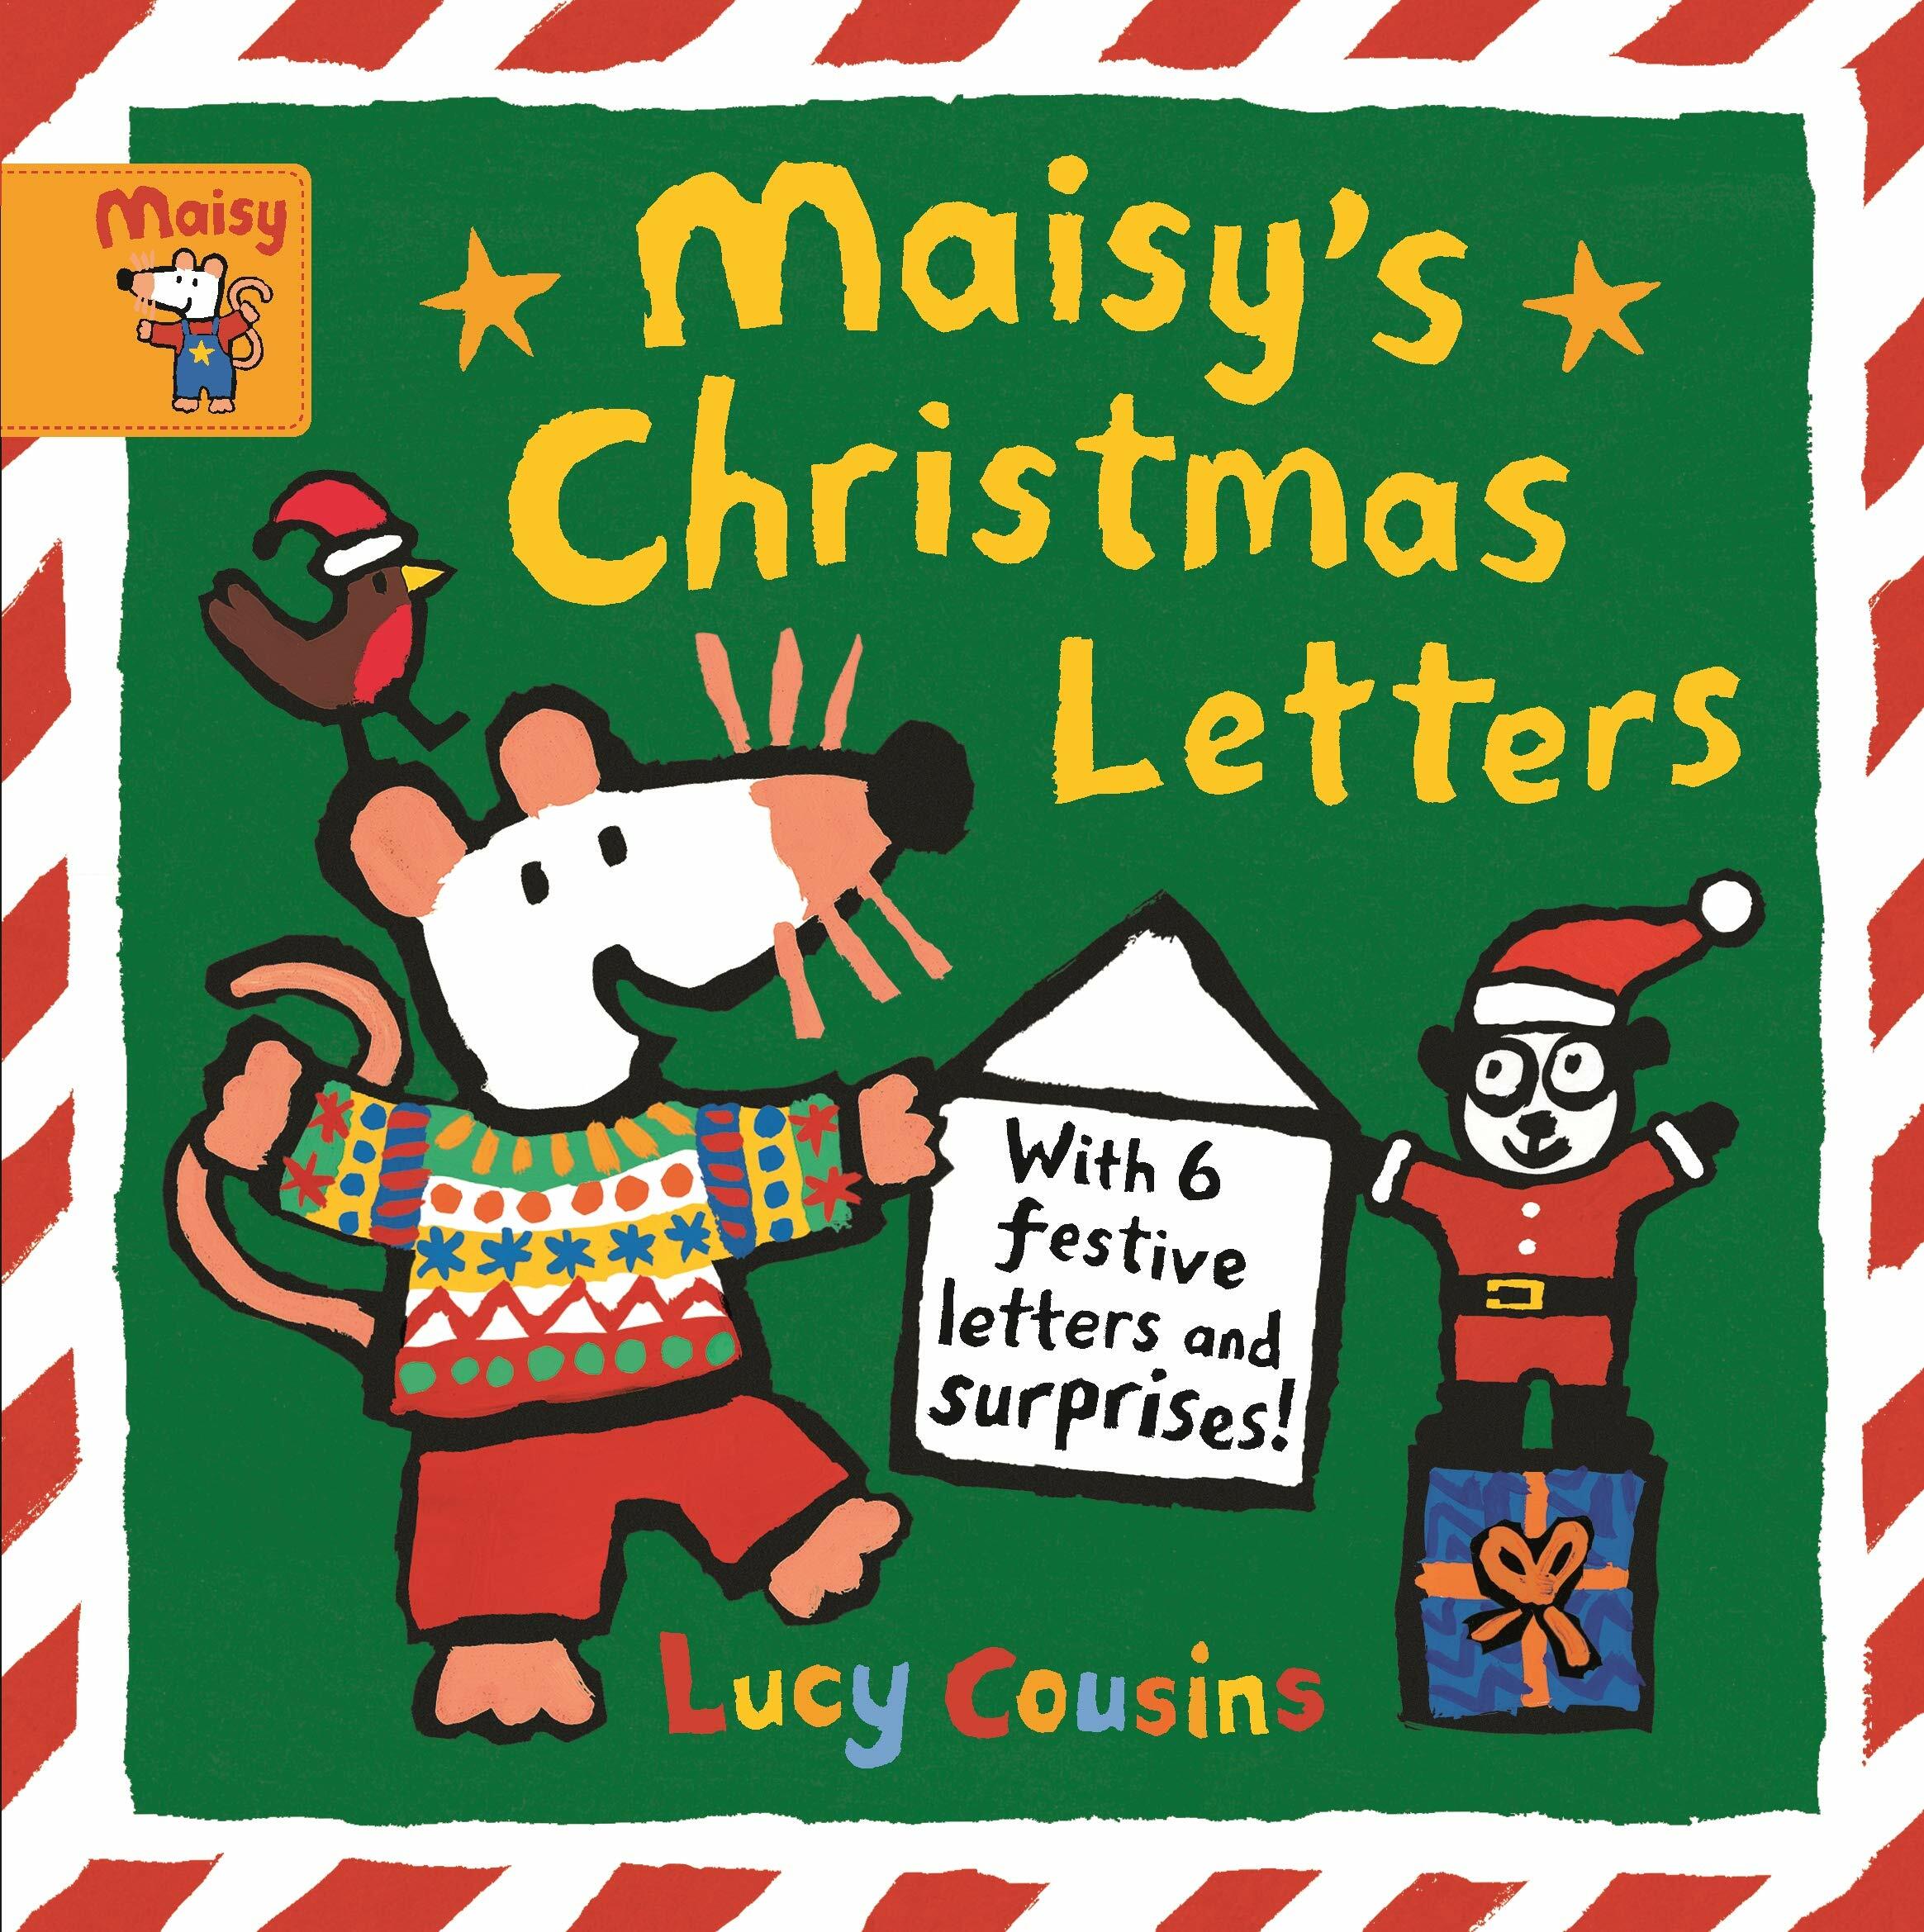 Maisys Christmas Letters 메이지 크리스마스 편지 (Hardcover)